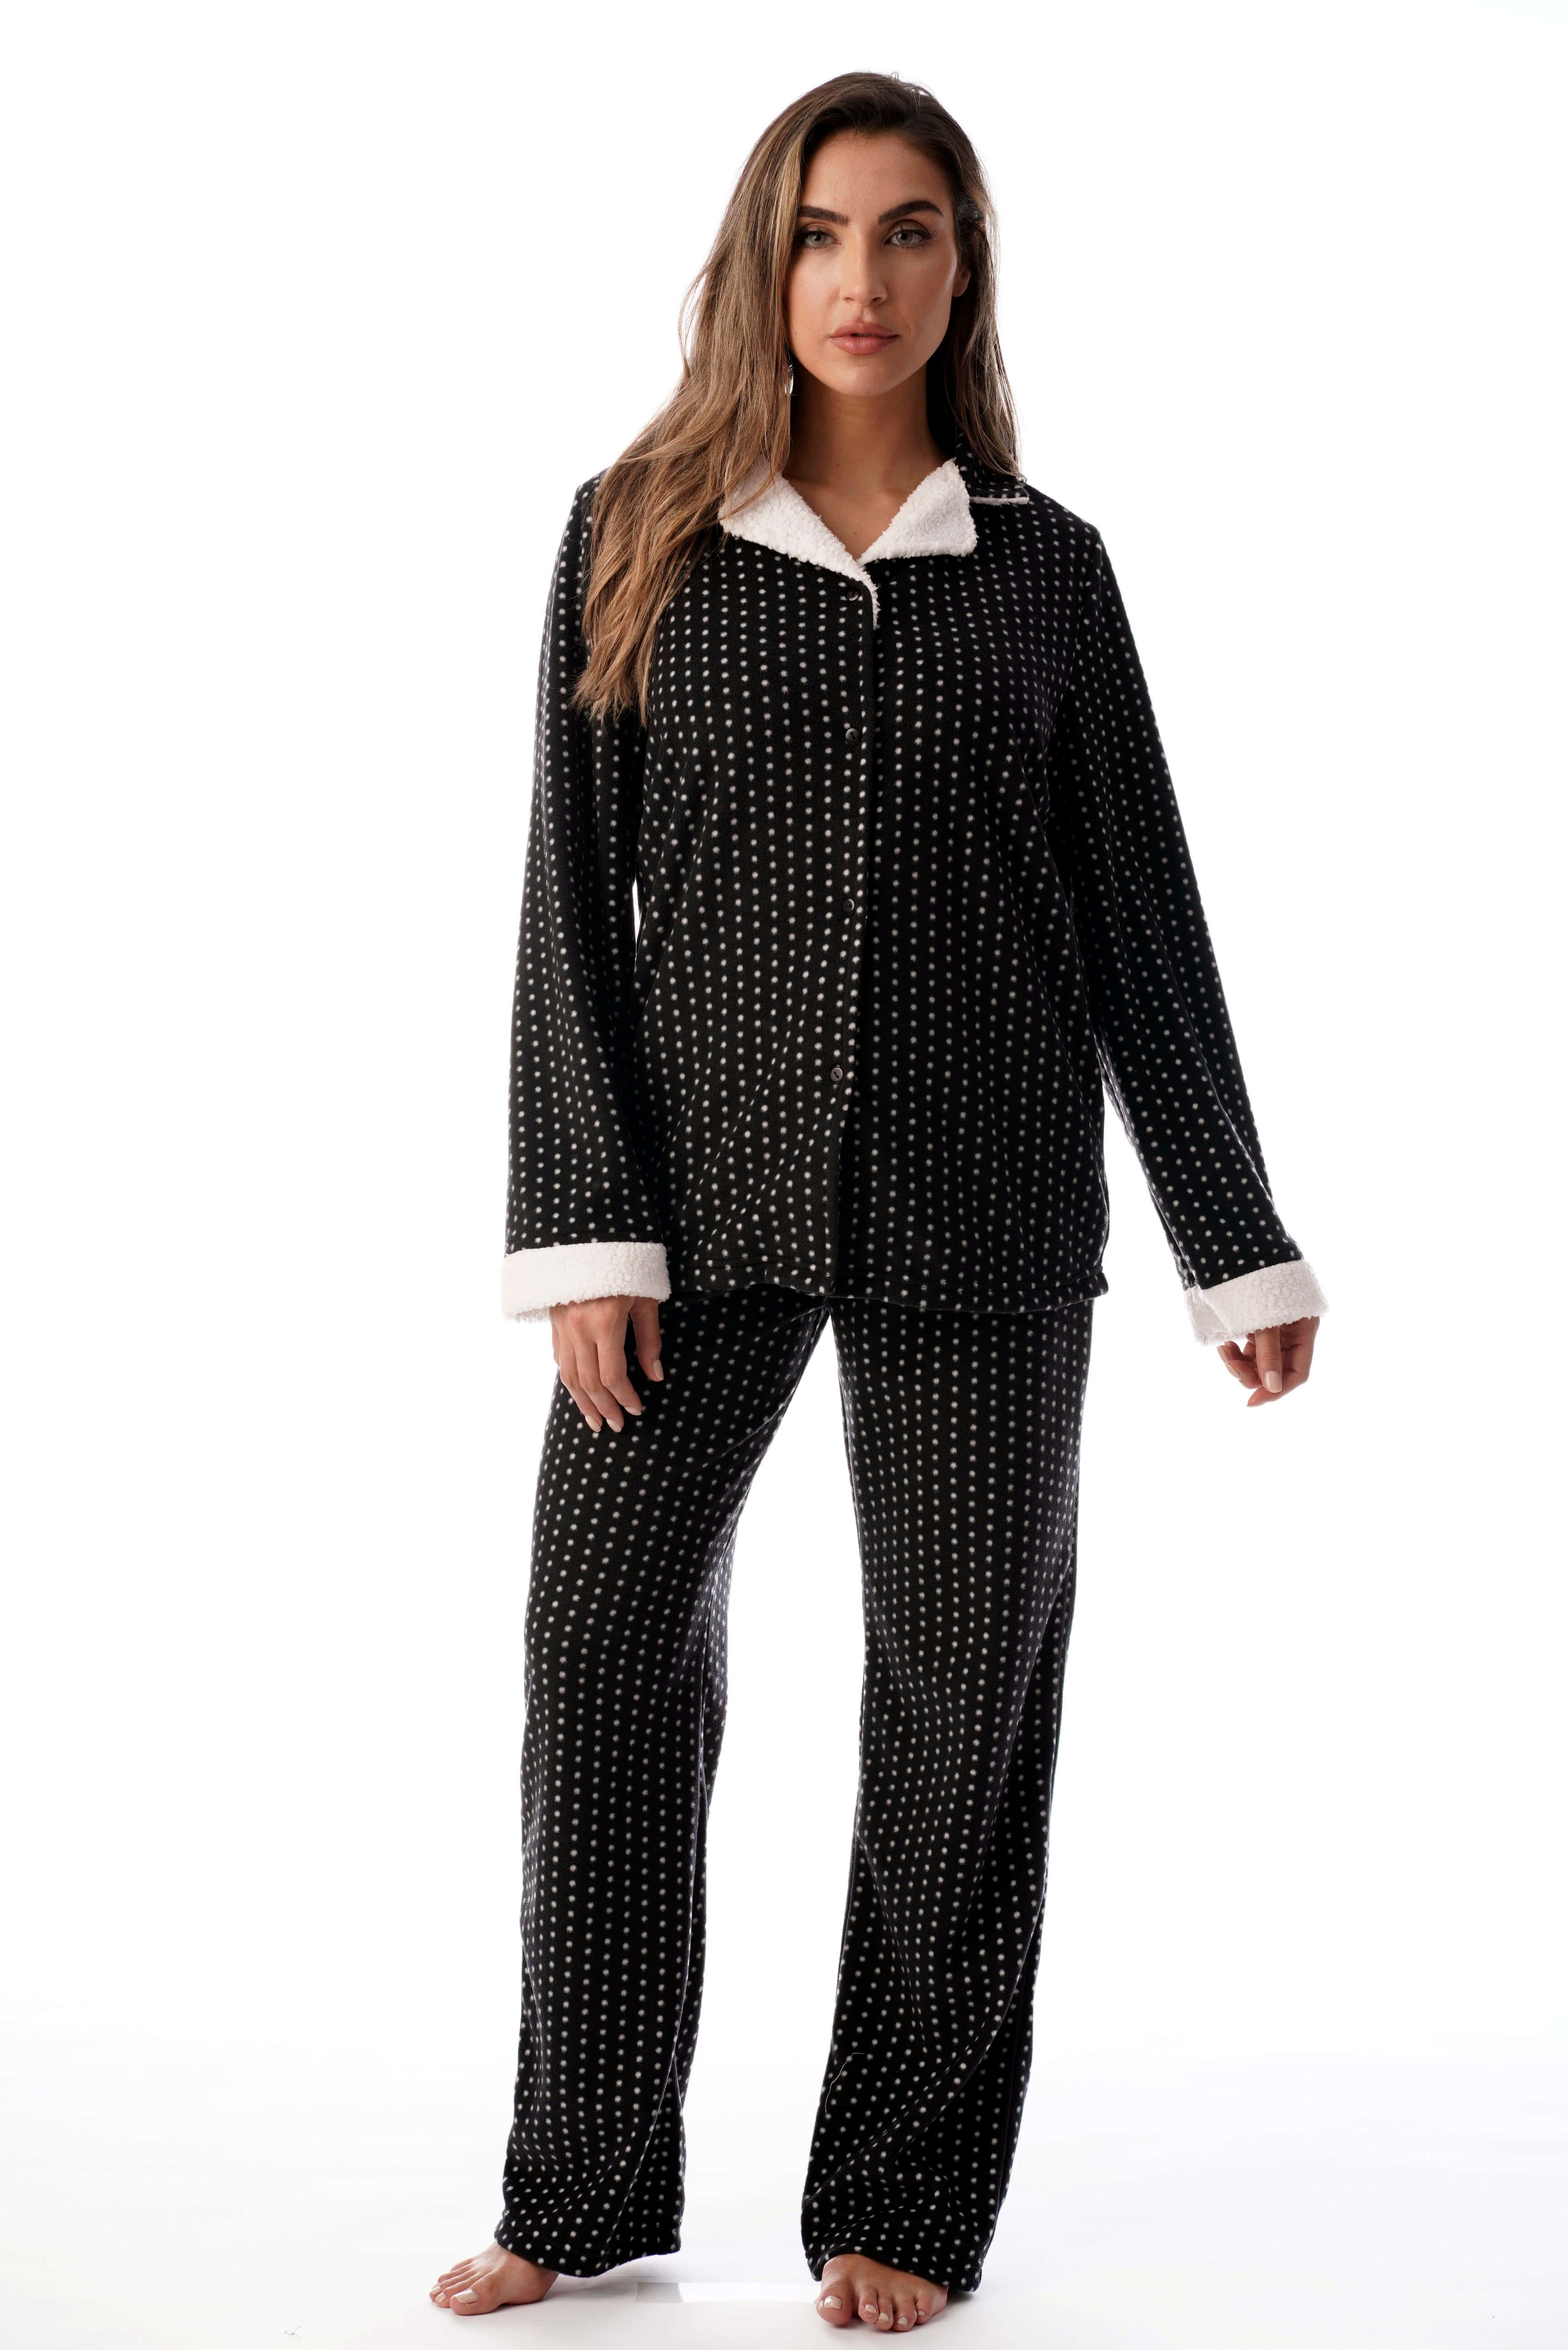 Cocoom Stretch Microfleece Pajama Pant Set for Women with Sherpa Trim  (Winter Dot, Large) - Walmart.com